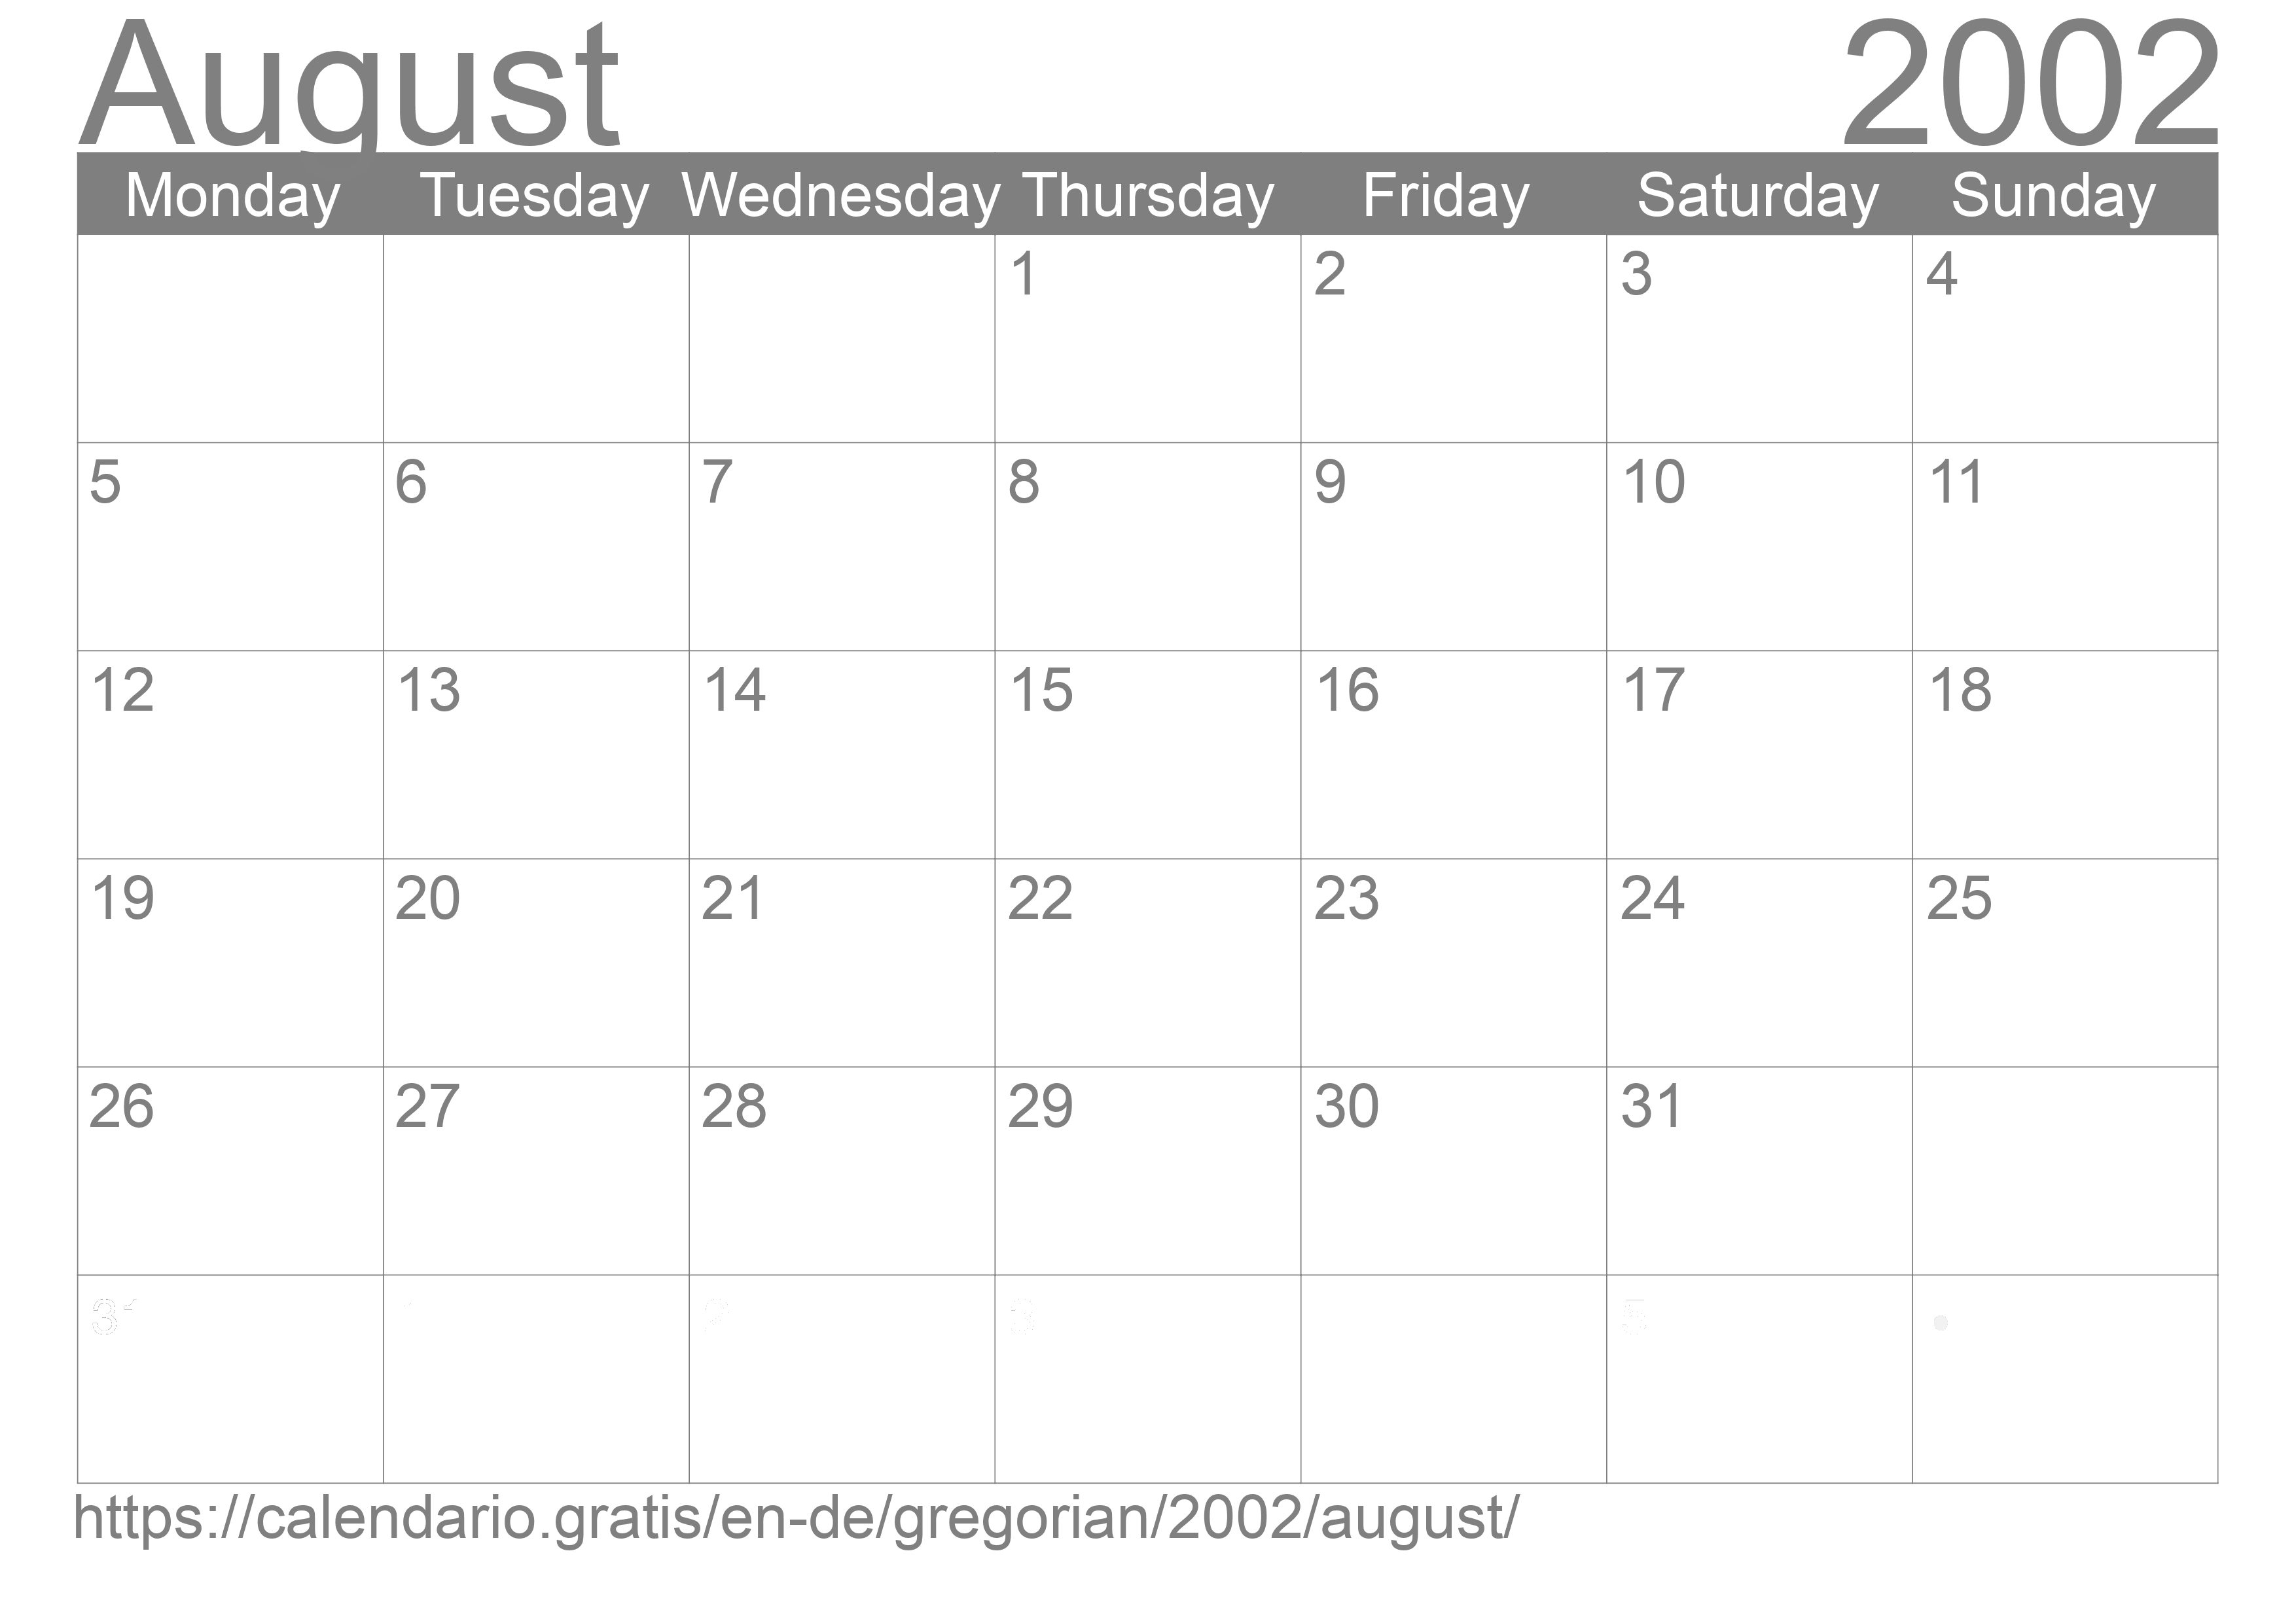 Calendar August 2002 to print